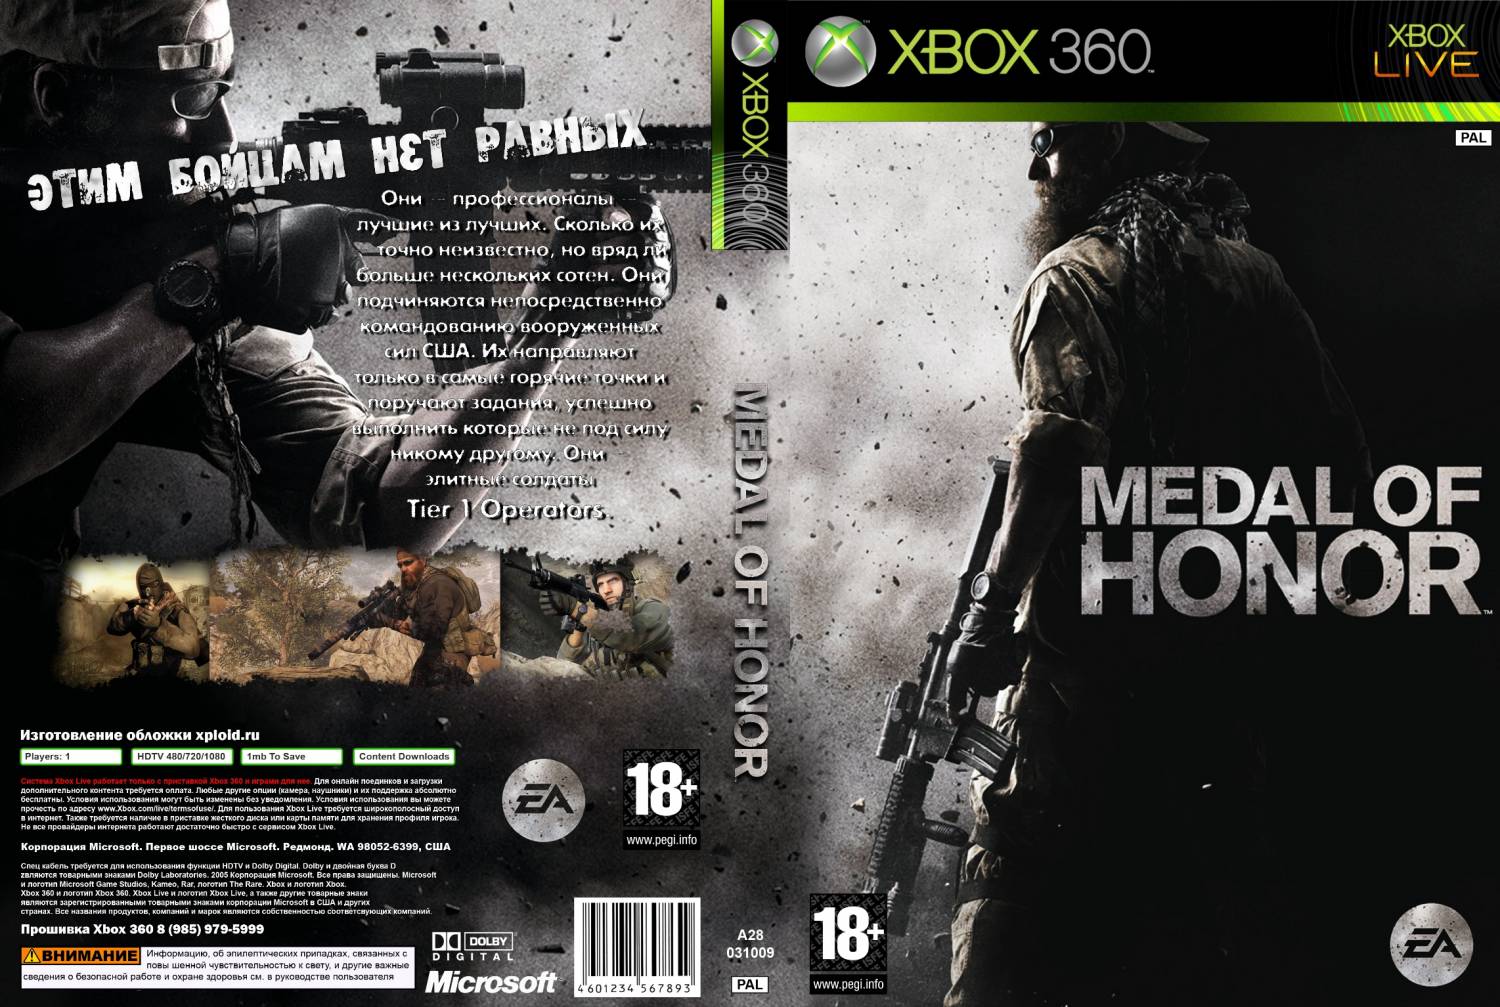 Общие xbox играми. Medal of Honor Xbox 360 обложка. Medal of Honor 2010 обложка. Медаль оф хонор на Икс бокс 360. Medal of Honor 2010 Xbox 360 обложка.